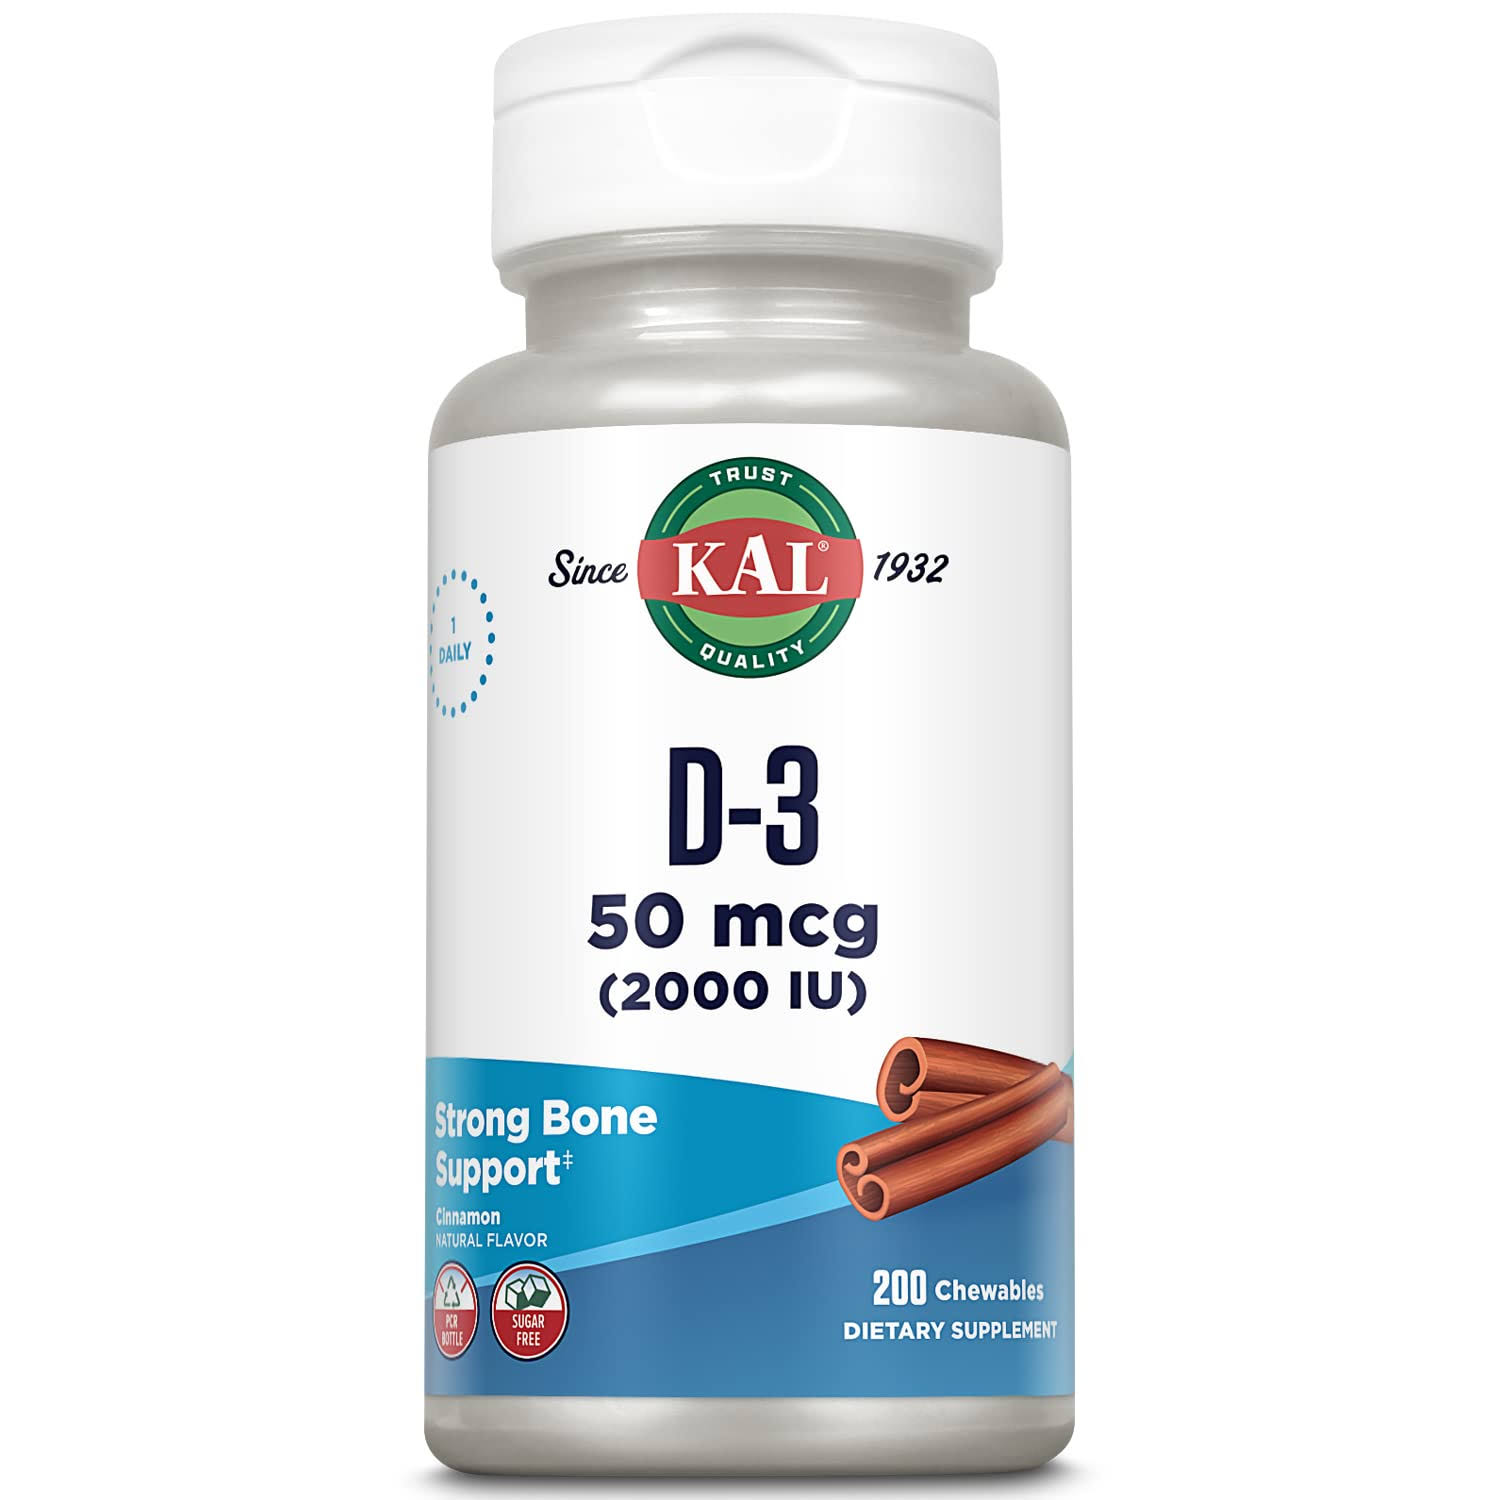 Kal D3 2000 Iu Sugarless Chewable Dietary Supplement - Cinnamon, 200ct